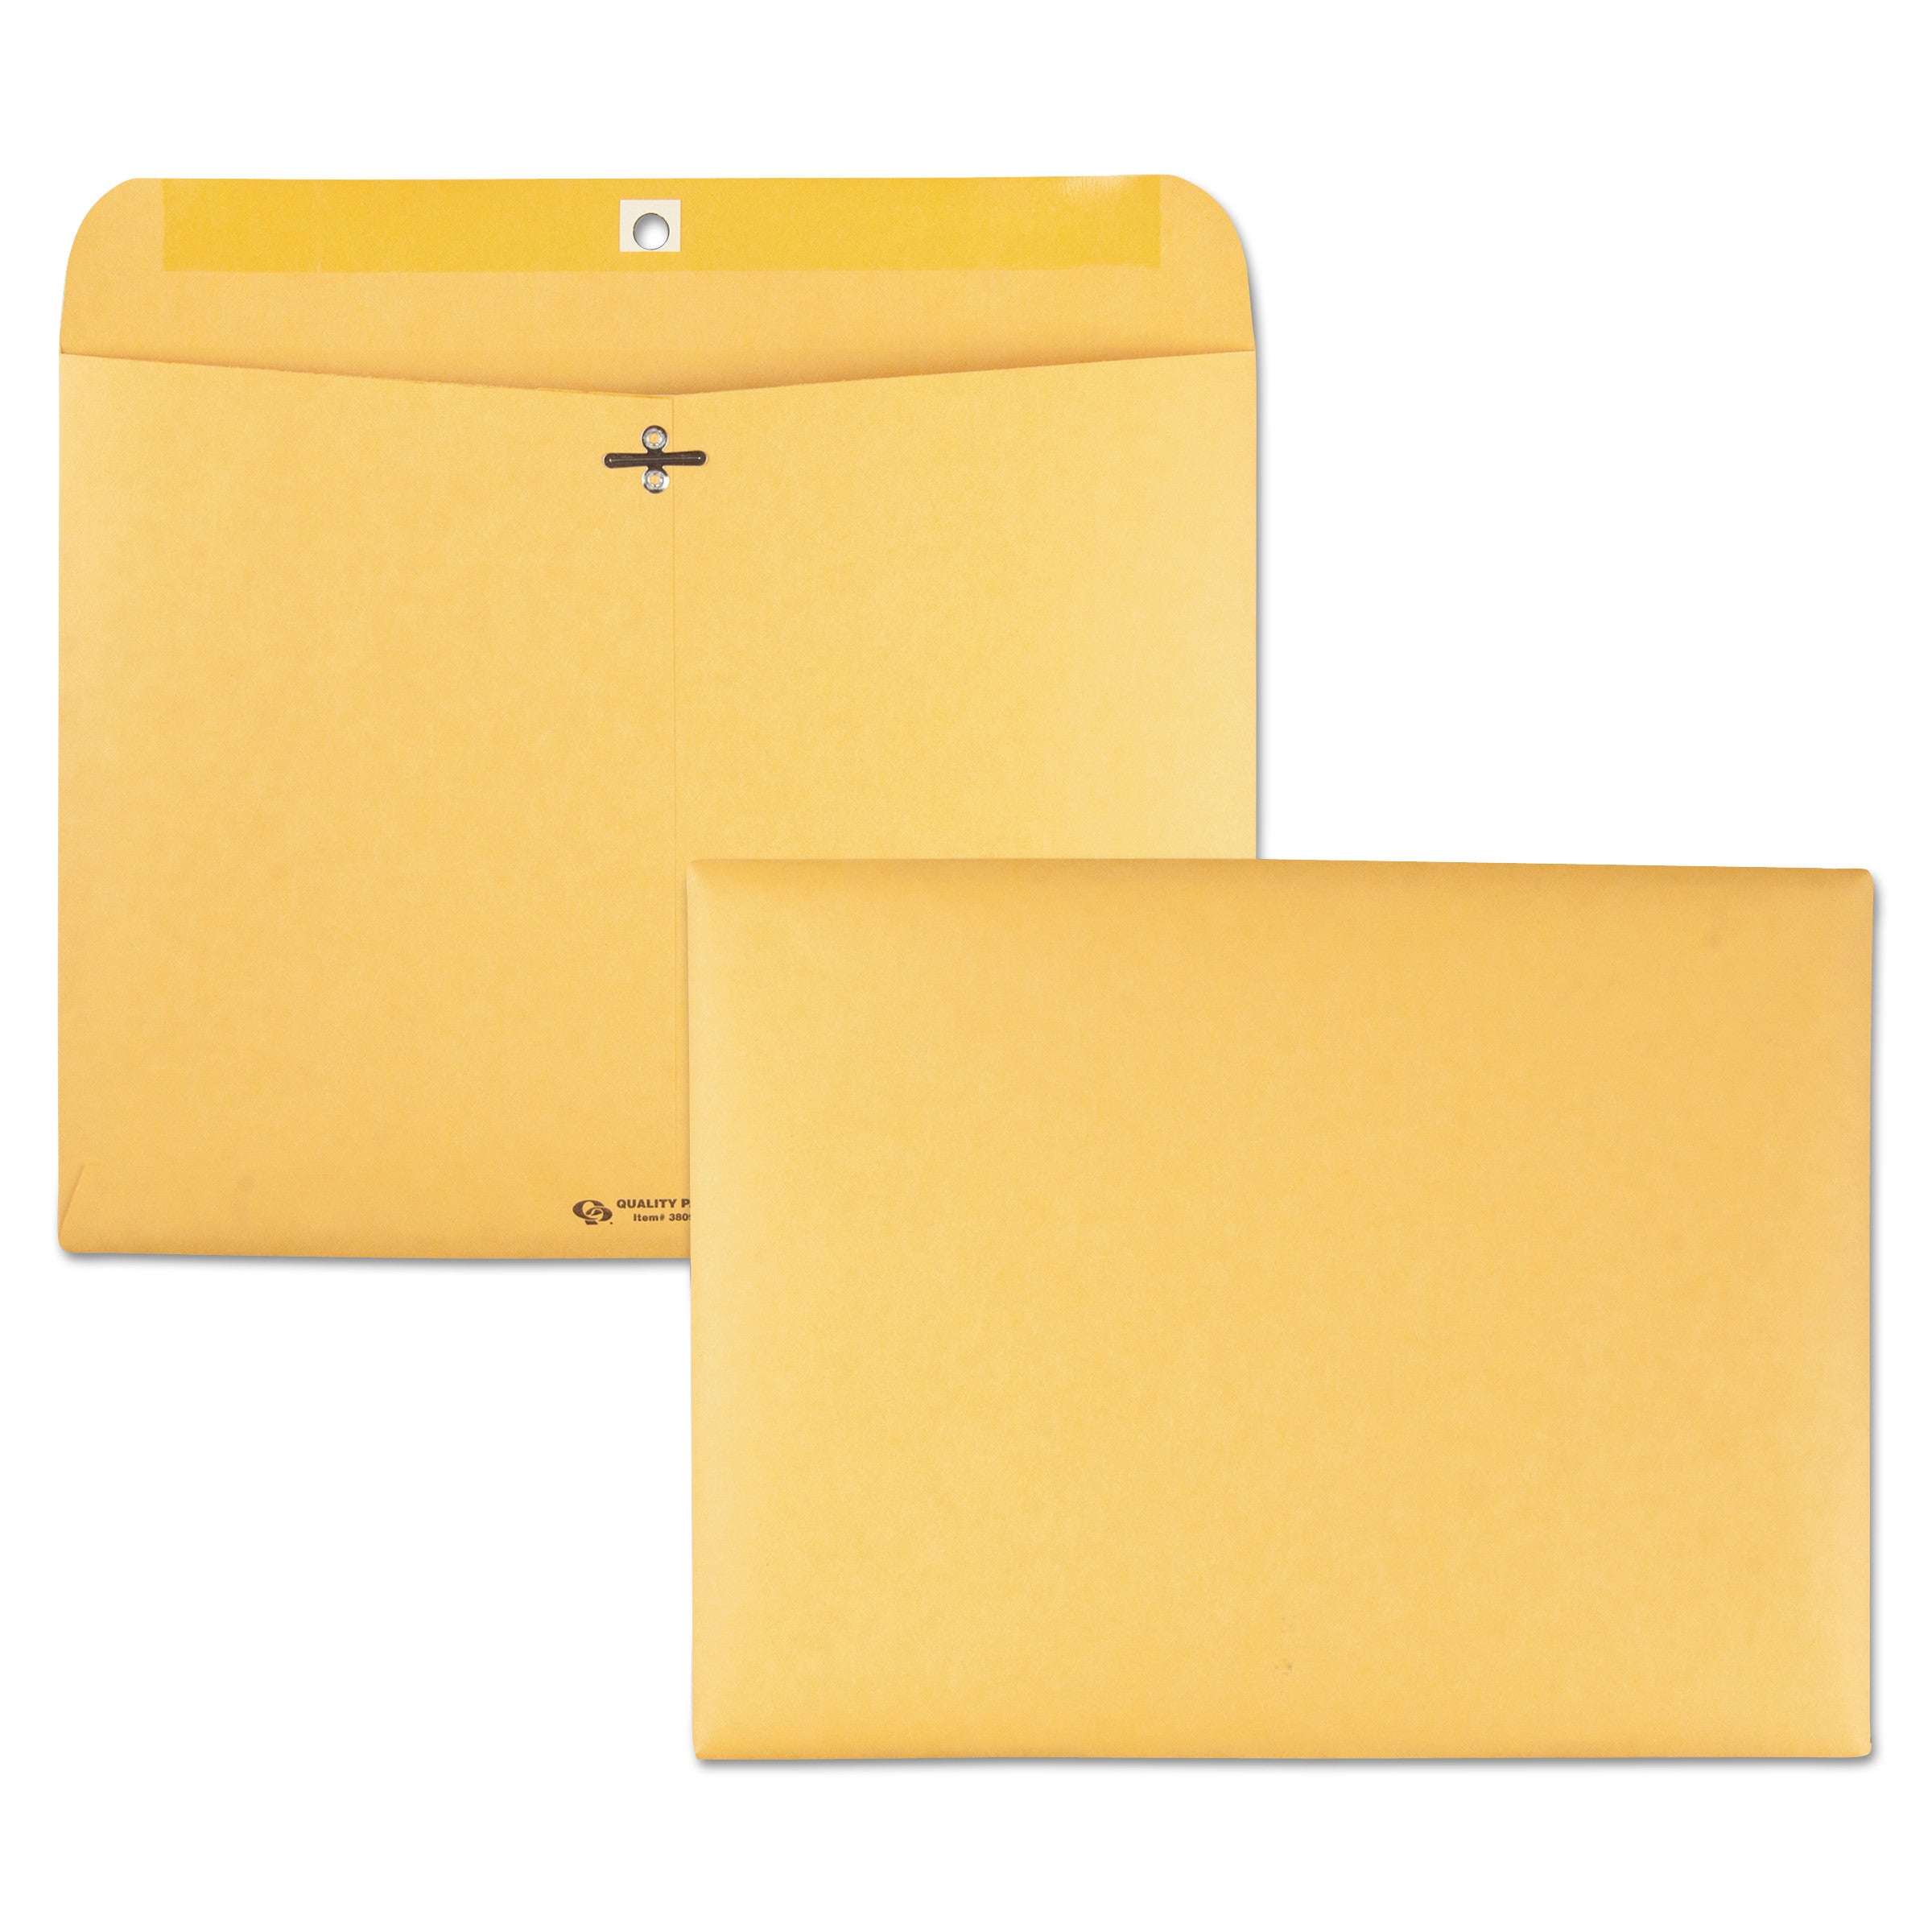 Redi-File Clasp Envelope, #90, Cheese Blade Flap, Clasp/Gummed Closure, 9 x 12, Brown Kraft, 100/Box - 